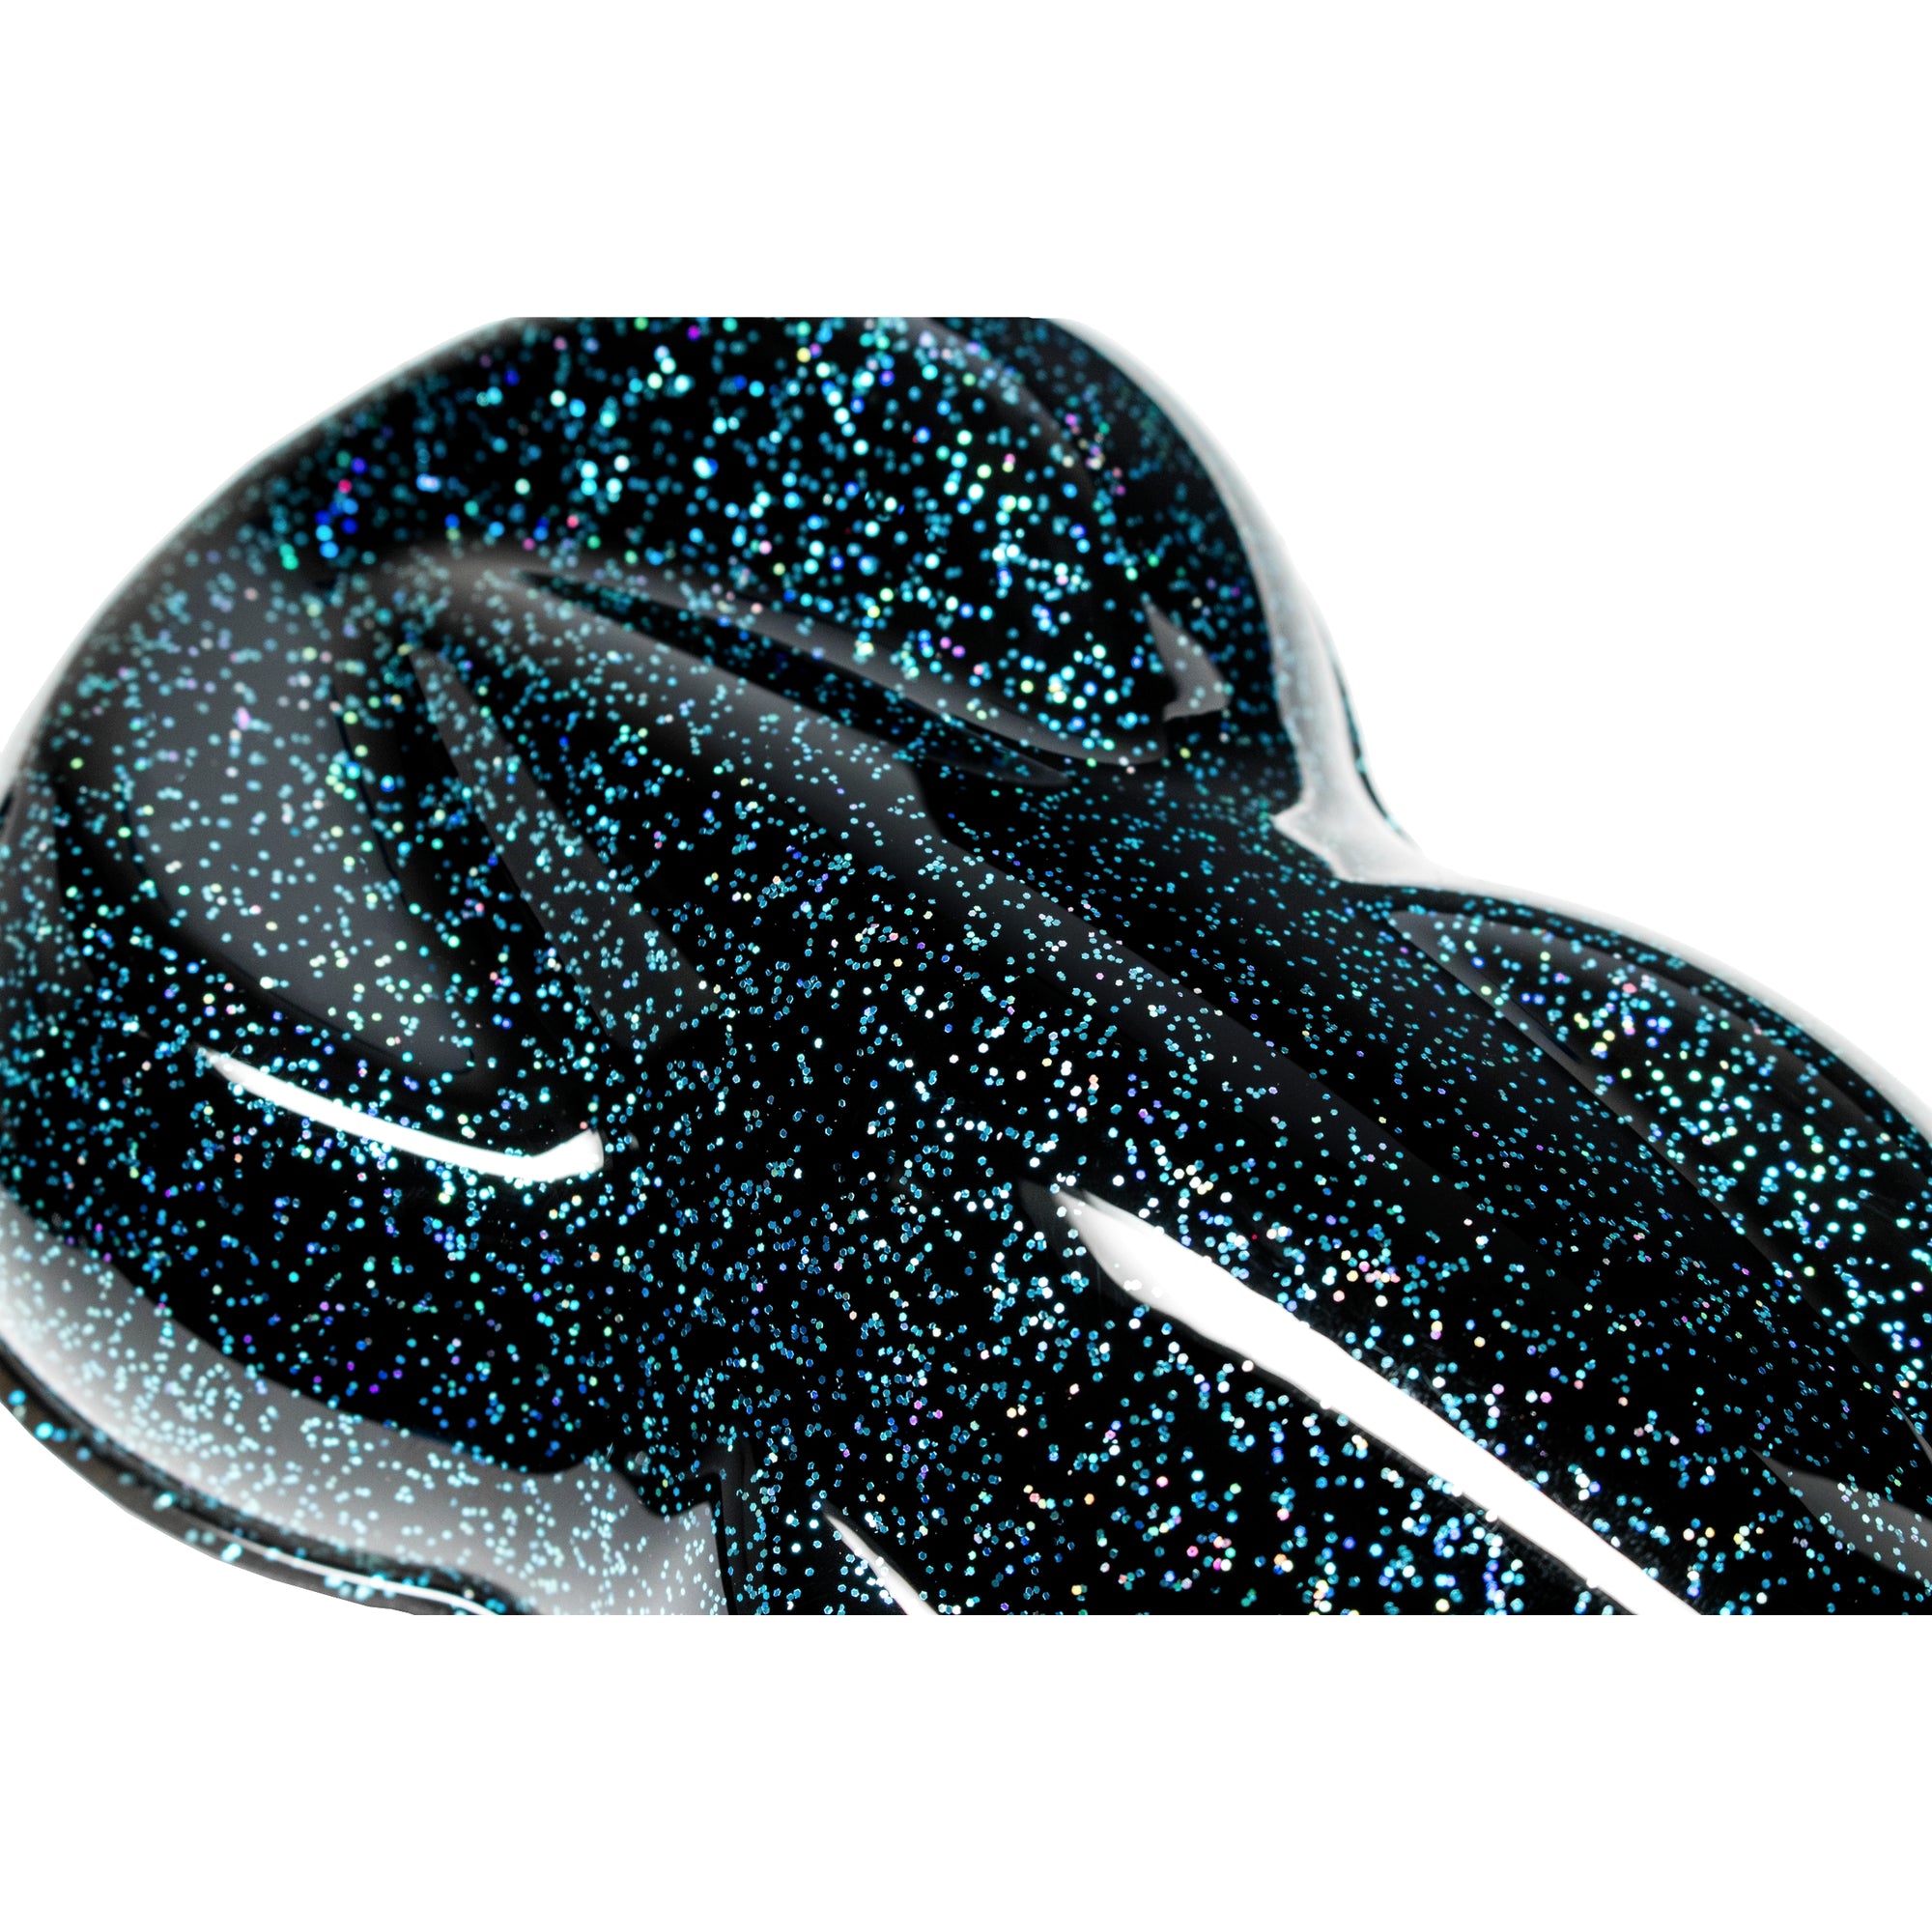 Black Cat Custom Automotive - Gauge Face Color Upgrades - Pearl Colors /  Carbon Fiber Design / Metal Flake Finish